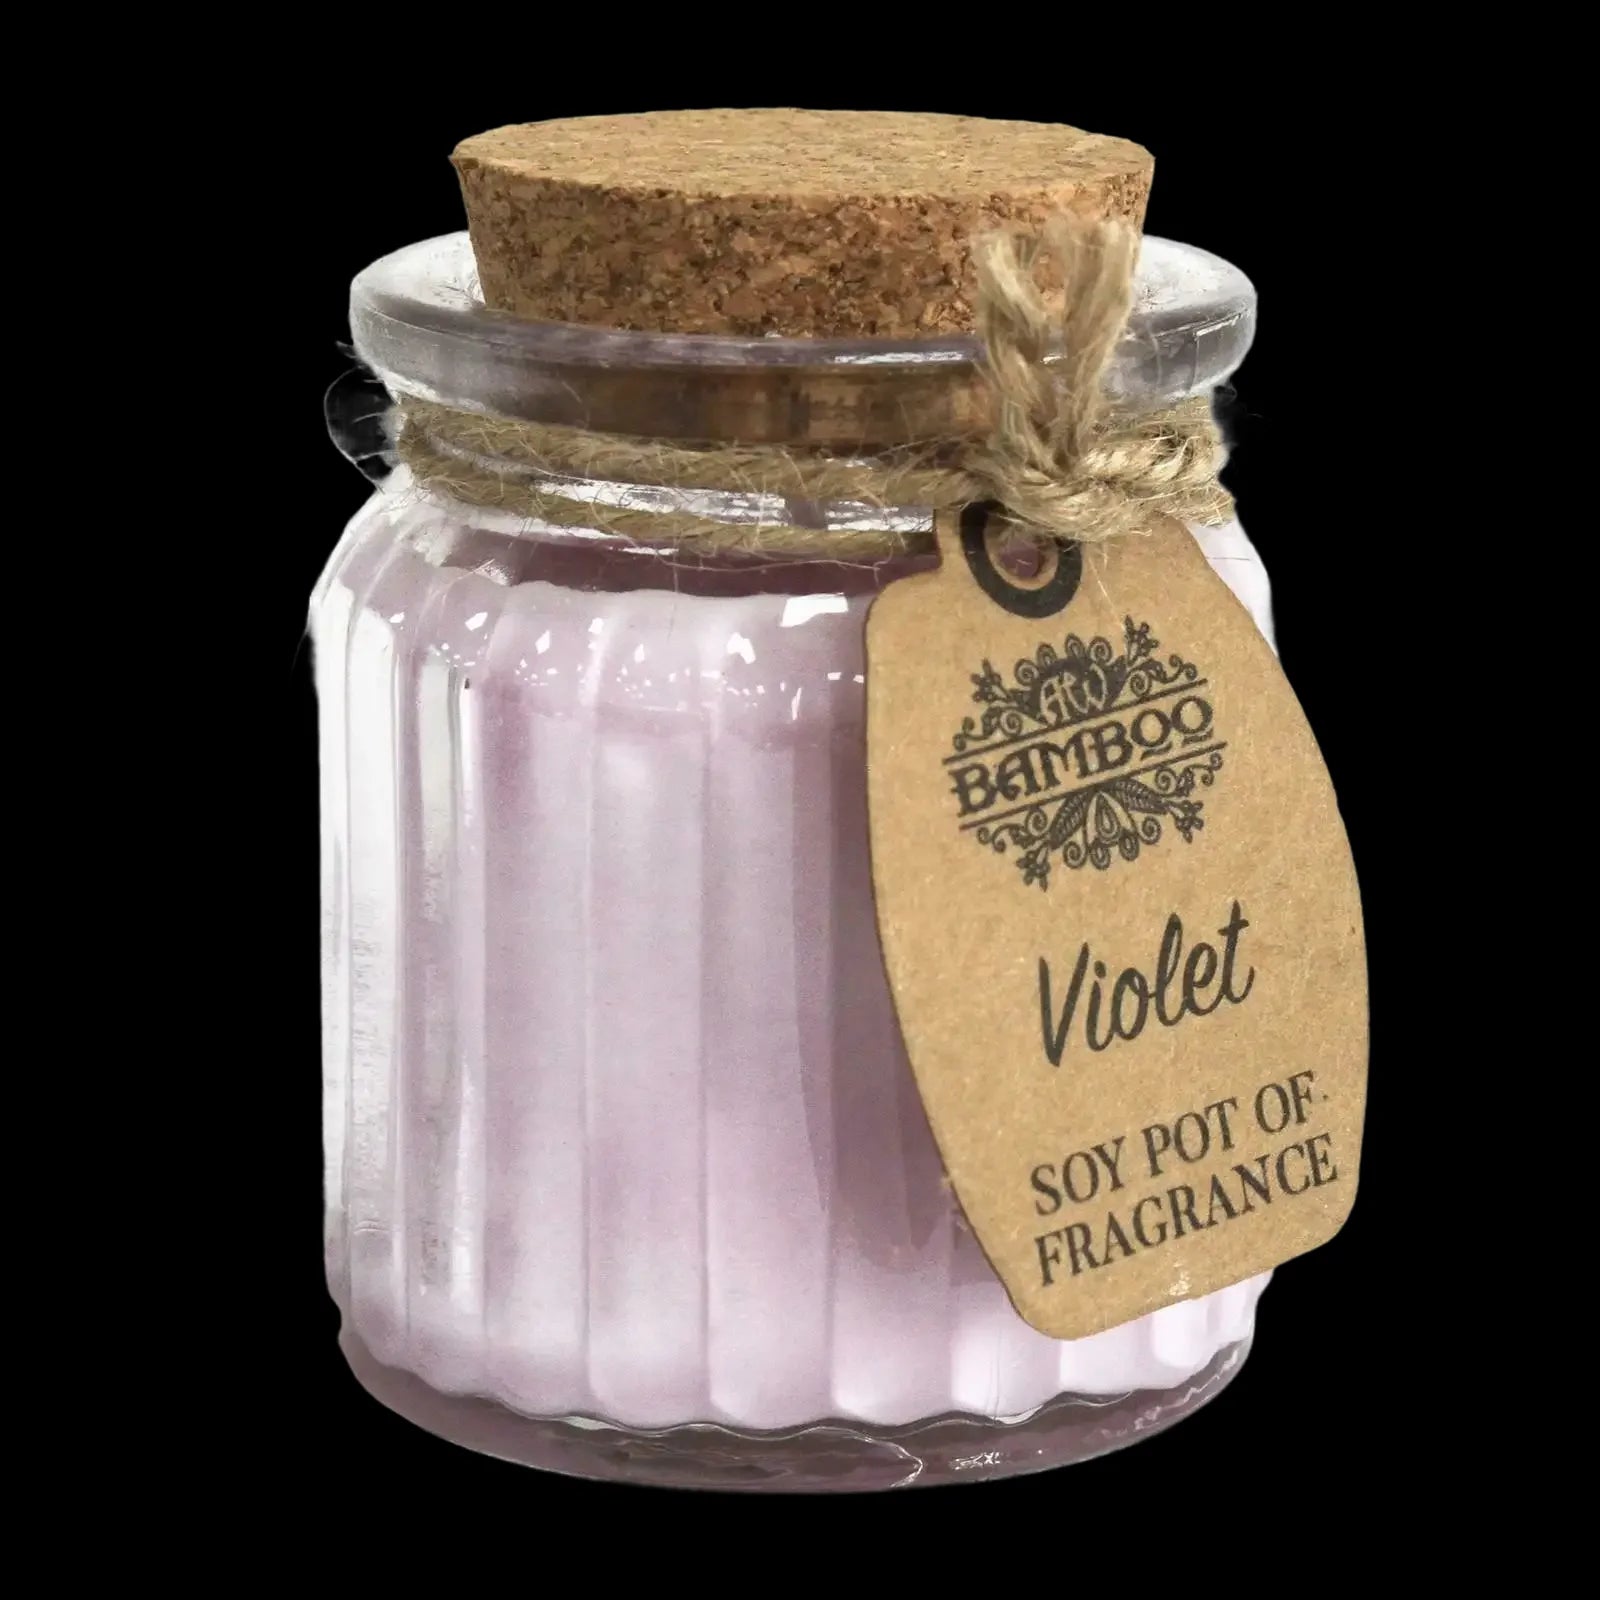 Violet Soy Pot Of Fragrance Candles - Ancient Wisdom - 1